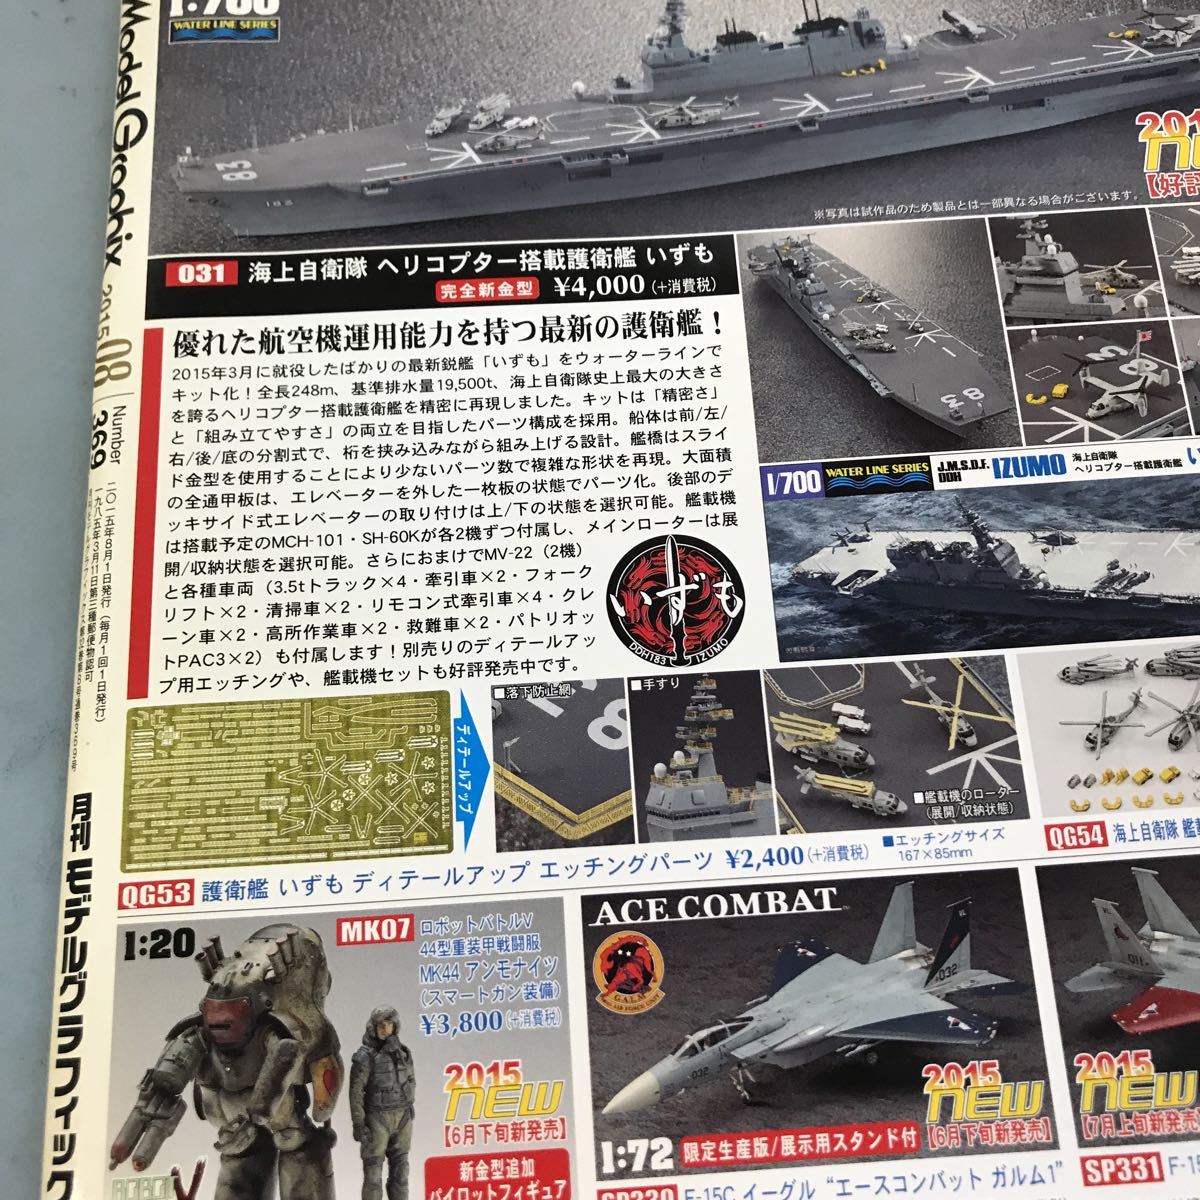 B12-014 ModelGraphix 2015 08 Number 369 巻頭特集 戦艦武蔵 月刊モデルグラフィックス 発行 大日本絵画_画像10